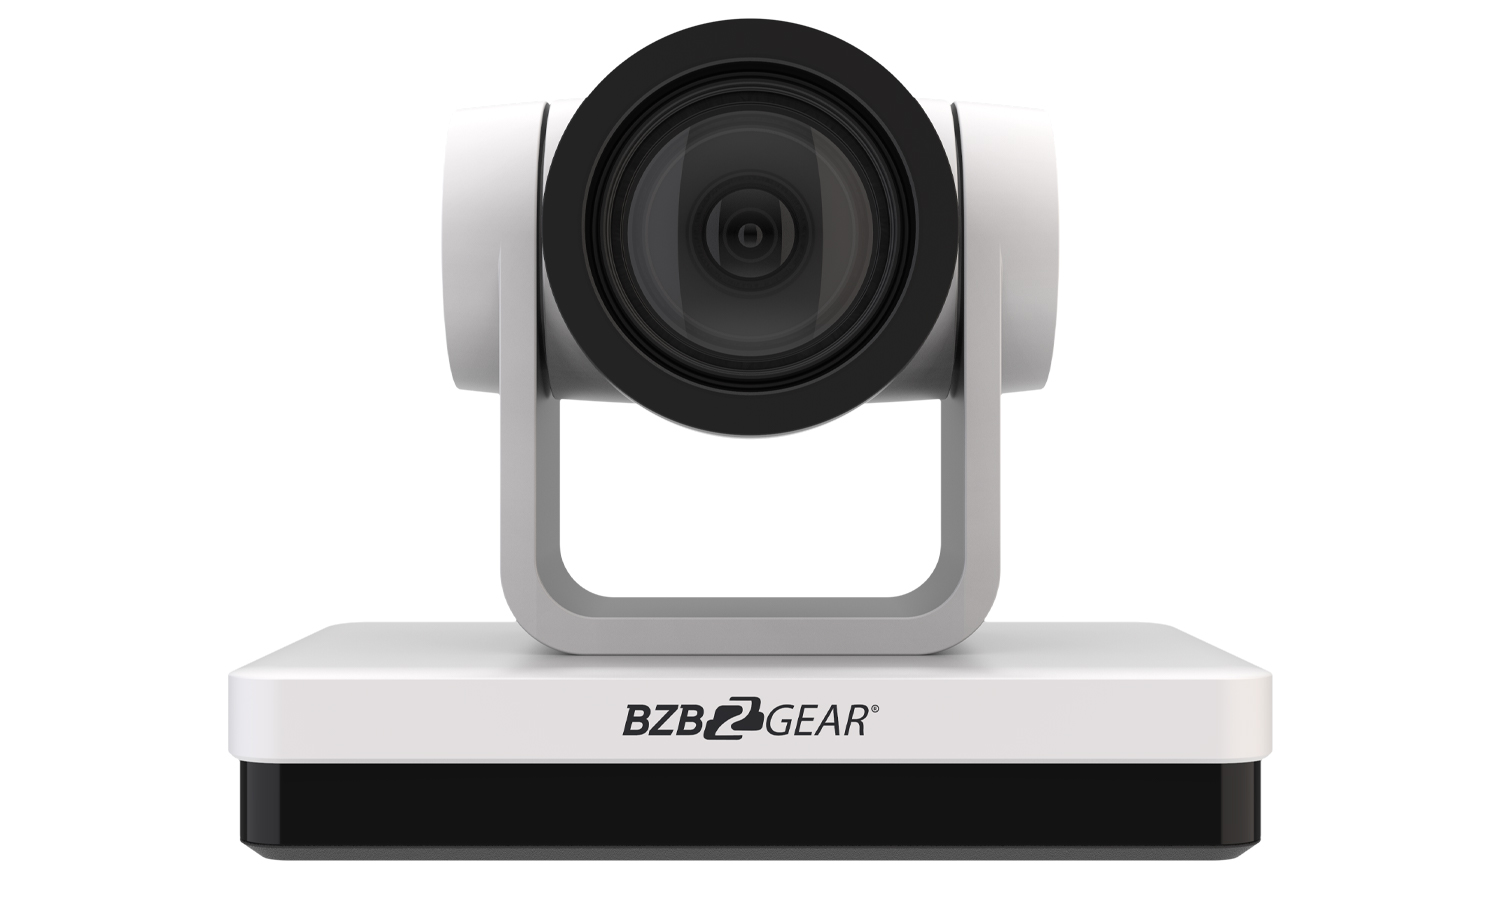 BG-UPTZ-30XHSU-W Universal 1080P FHD PTZ 30X HDMI/SDI/USB 3.0 RS232/485 Live Streaming Camera (White) by BZBGEAR